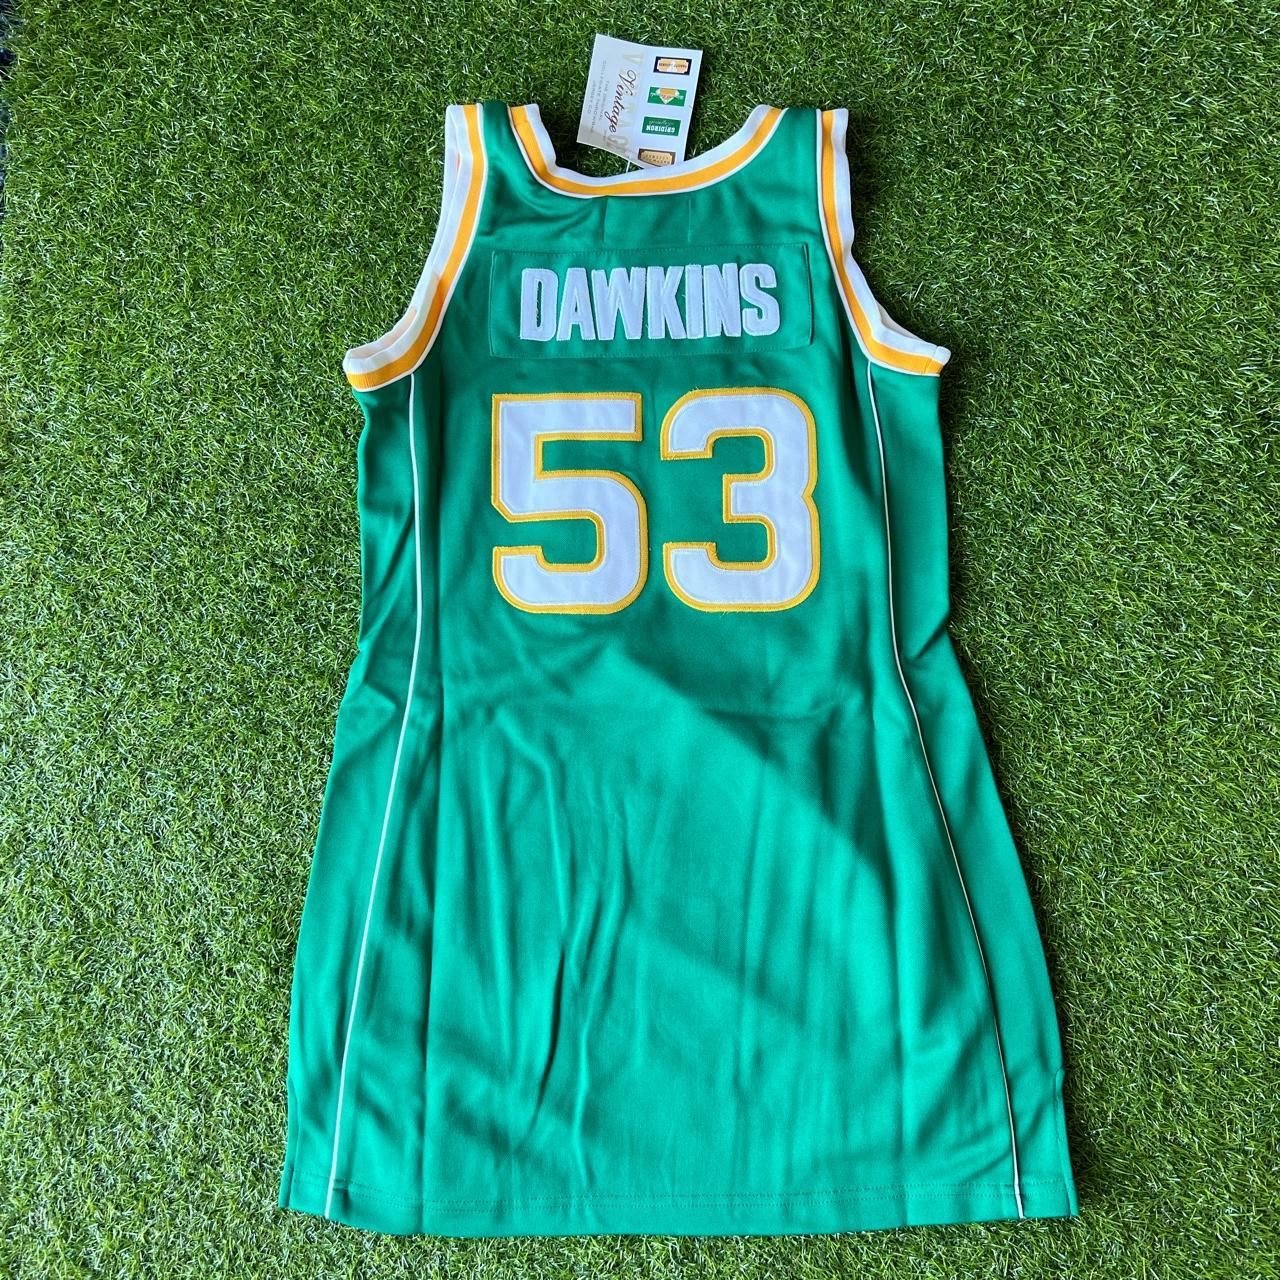 darryl dawkins jersey number